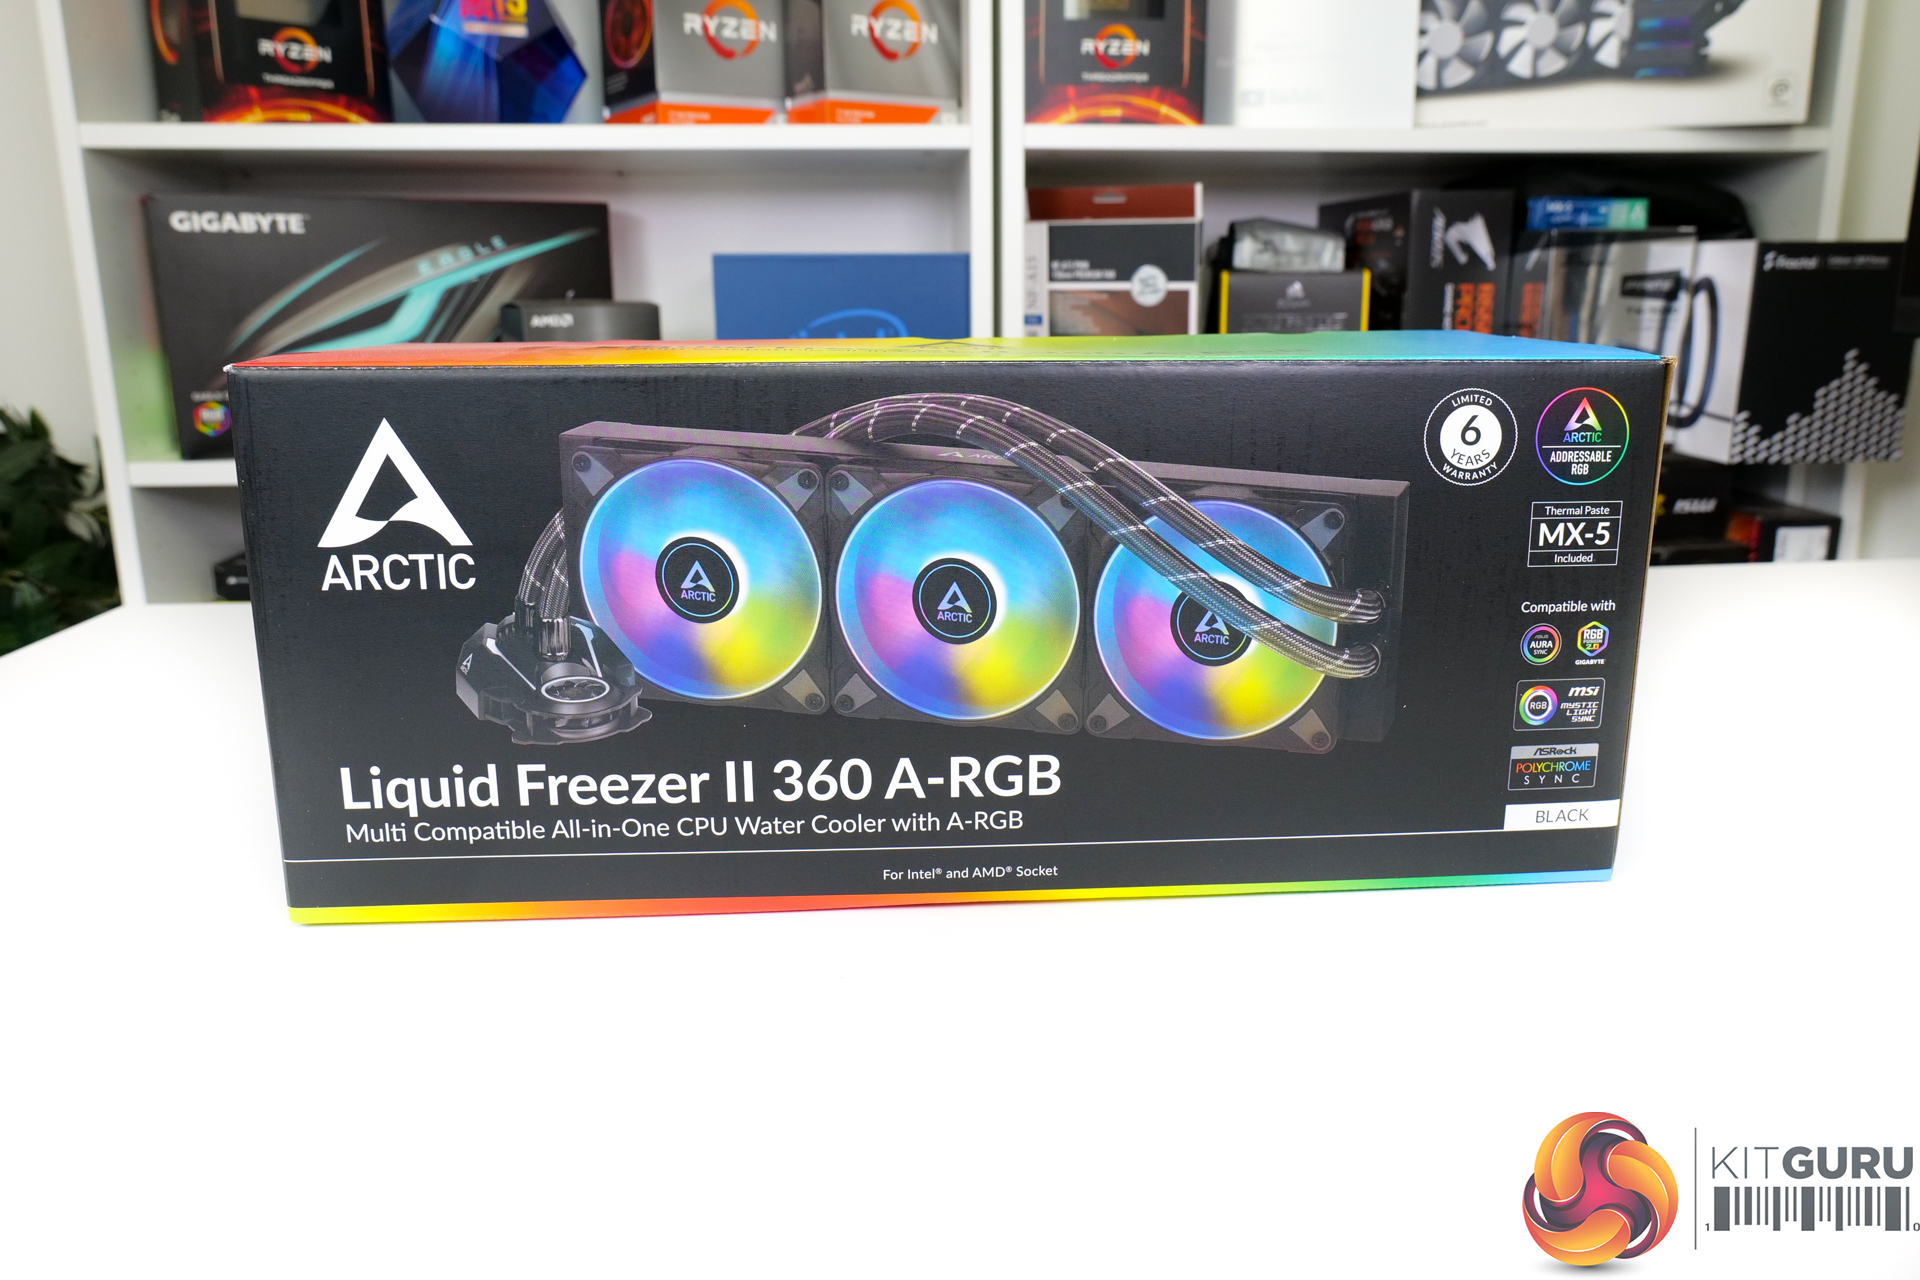  ARCTIC Liquid Freezer II 360 - Multi Compatible All-in